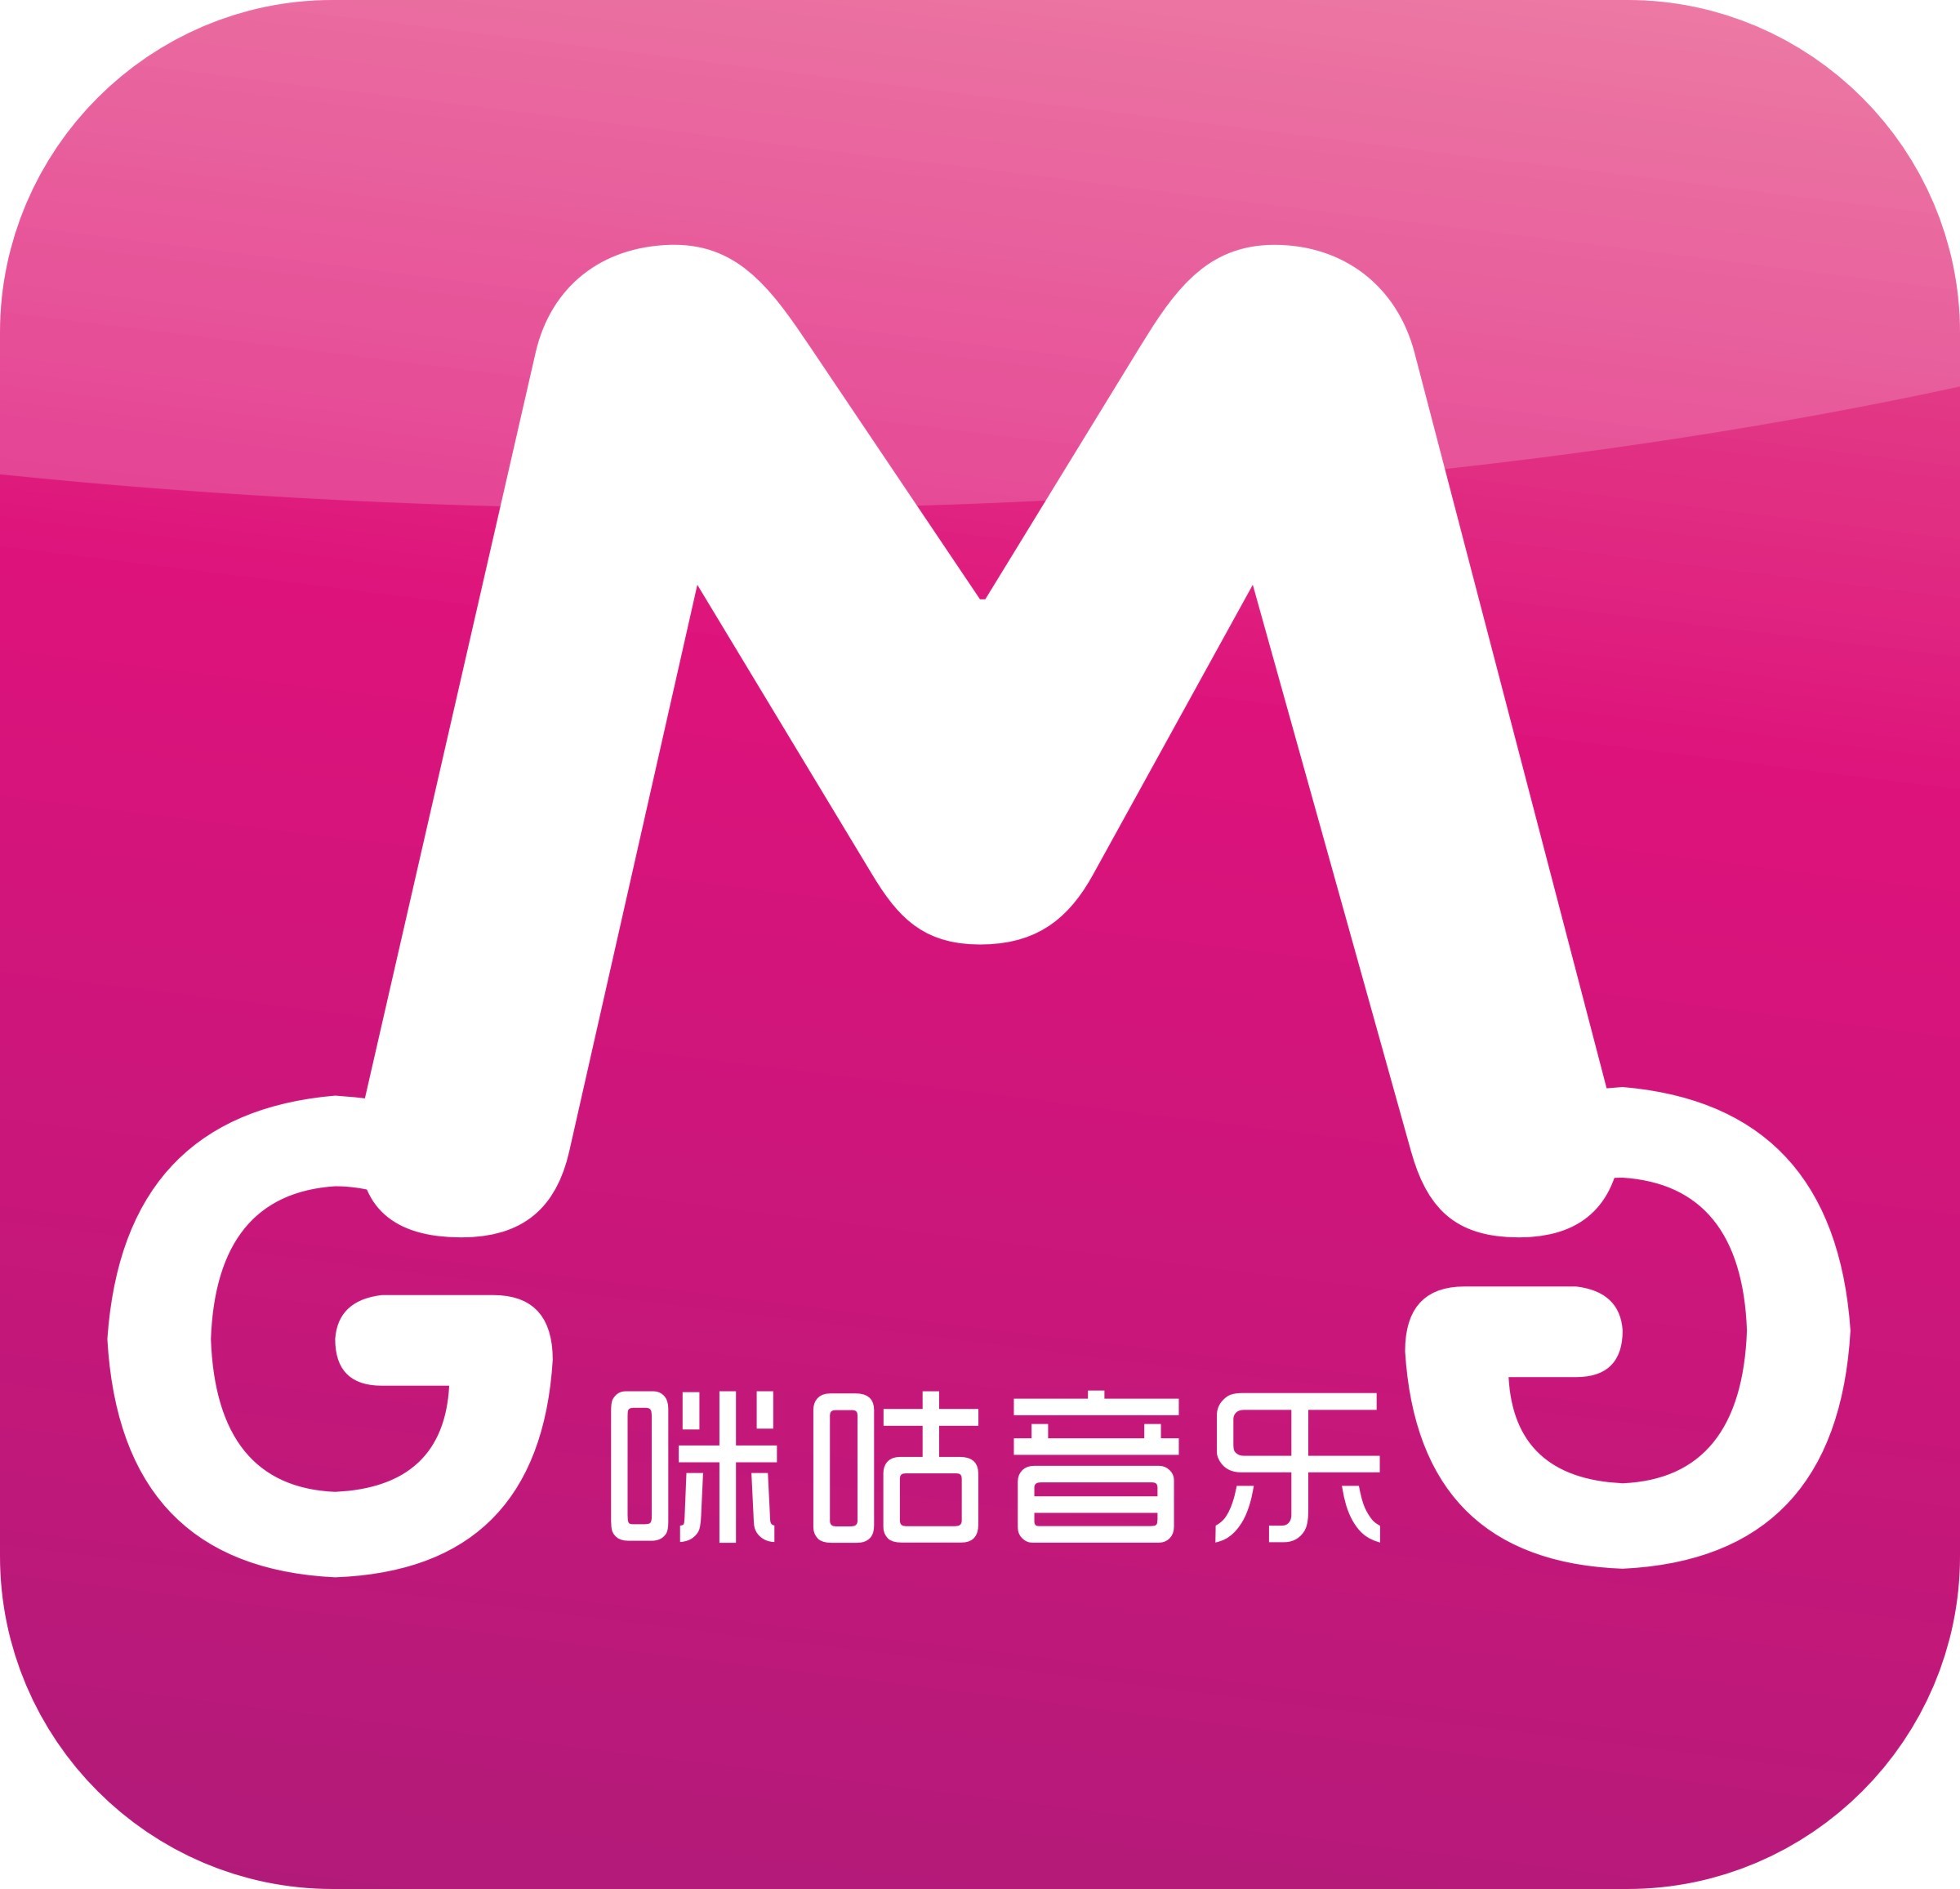 咪咕音乐logo设计